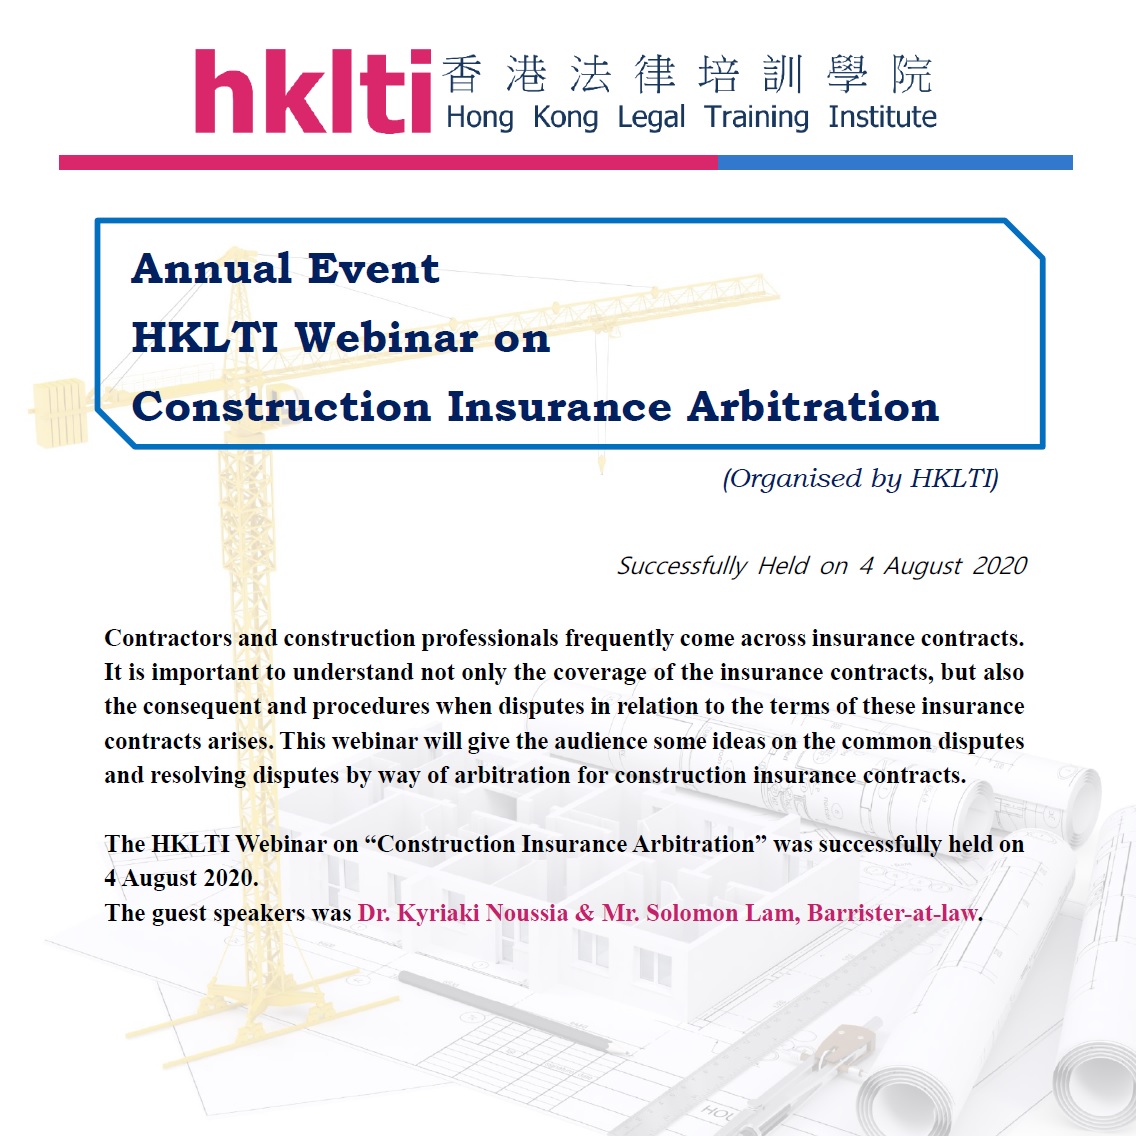 hklti annual event construction insurance arbitration seminar report 20200804